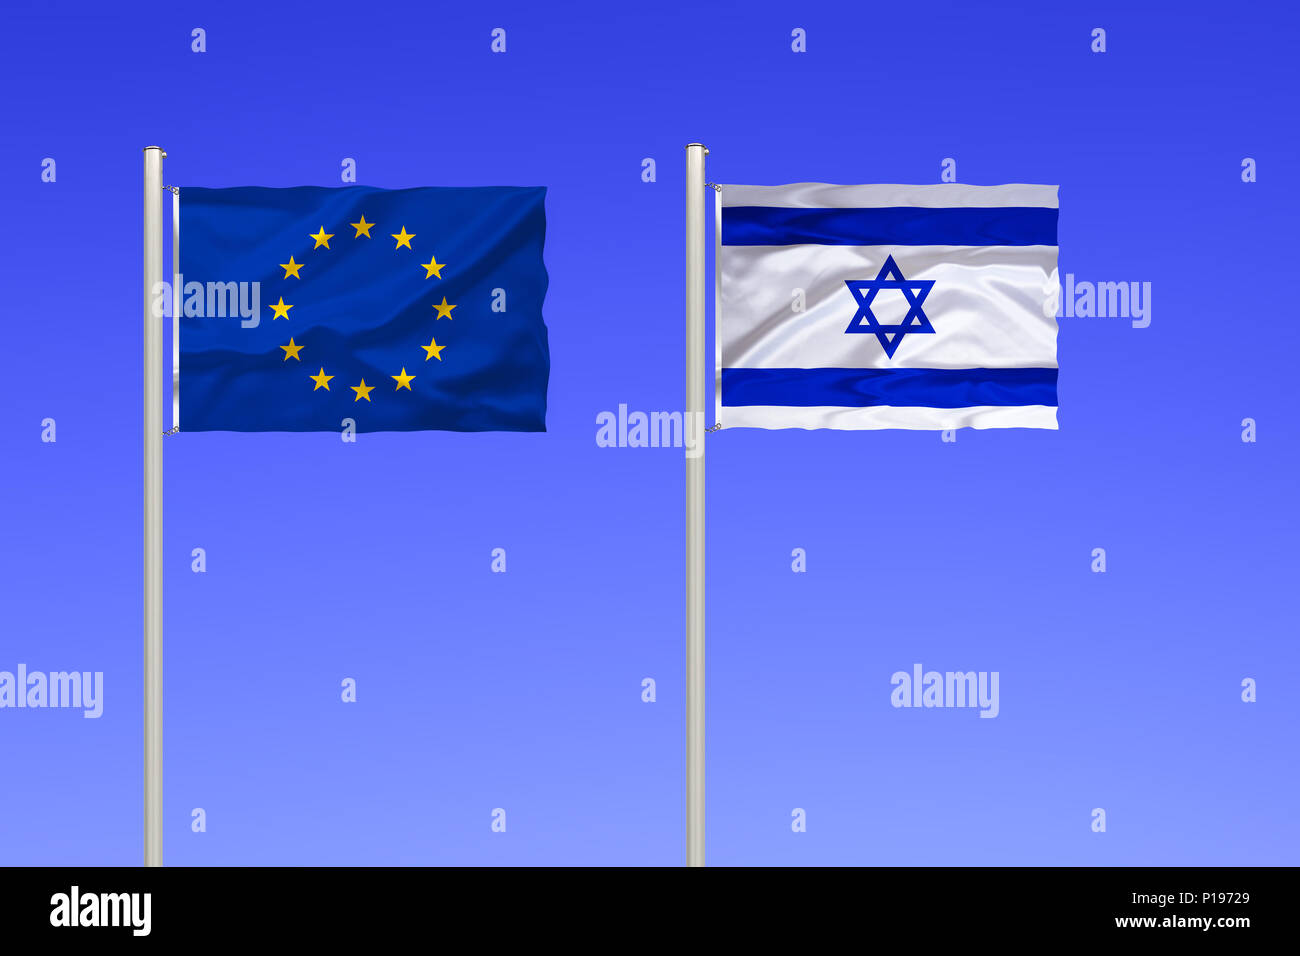 https://c8.alamy.com/comp/P19729/flag-of-europe-and-israel-flagge-von-europa-und-israel-P19729.jpg